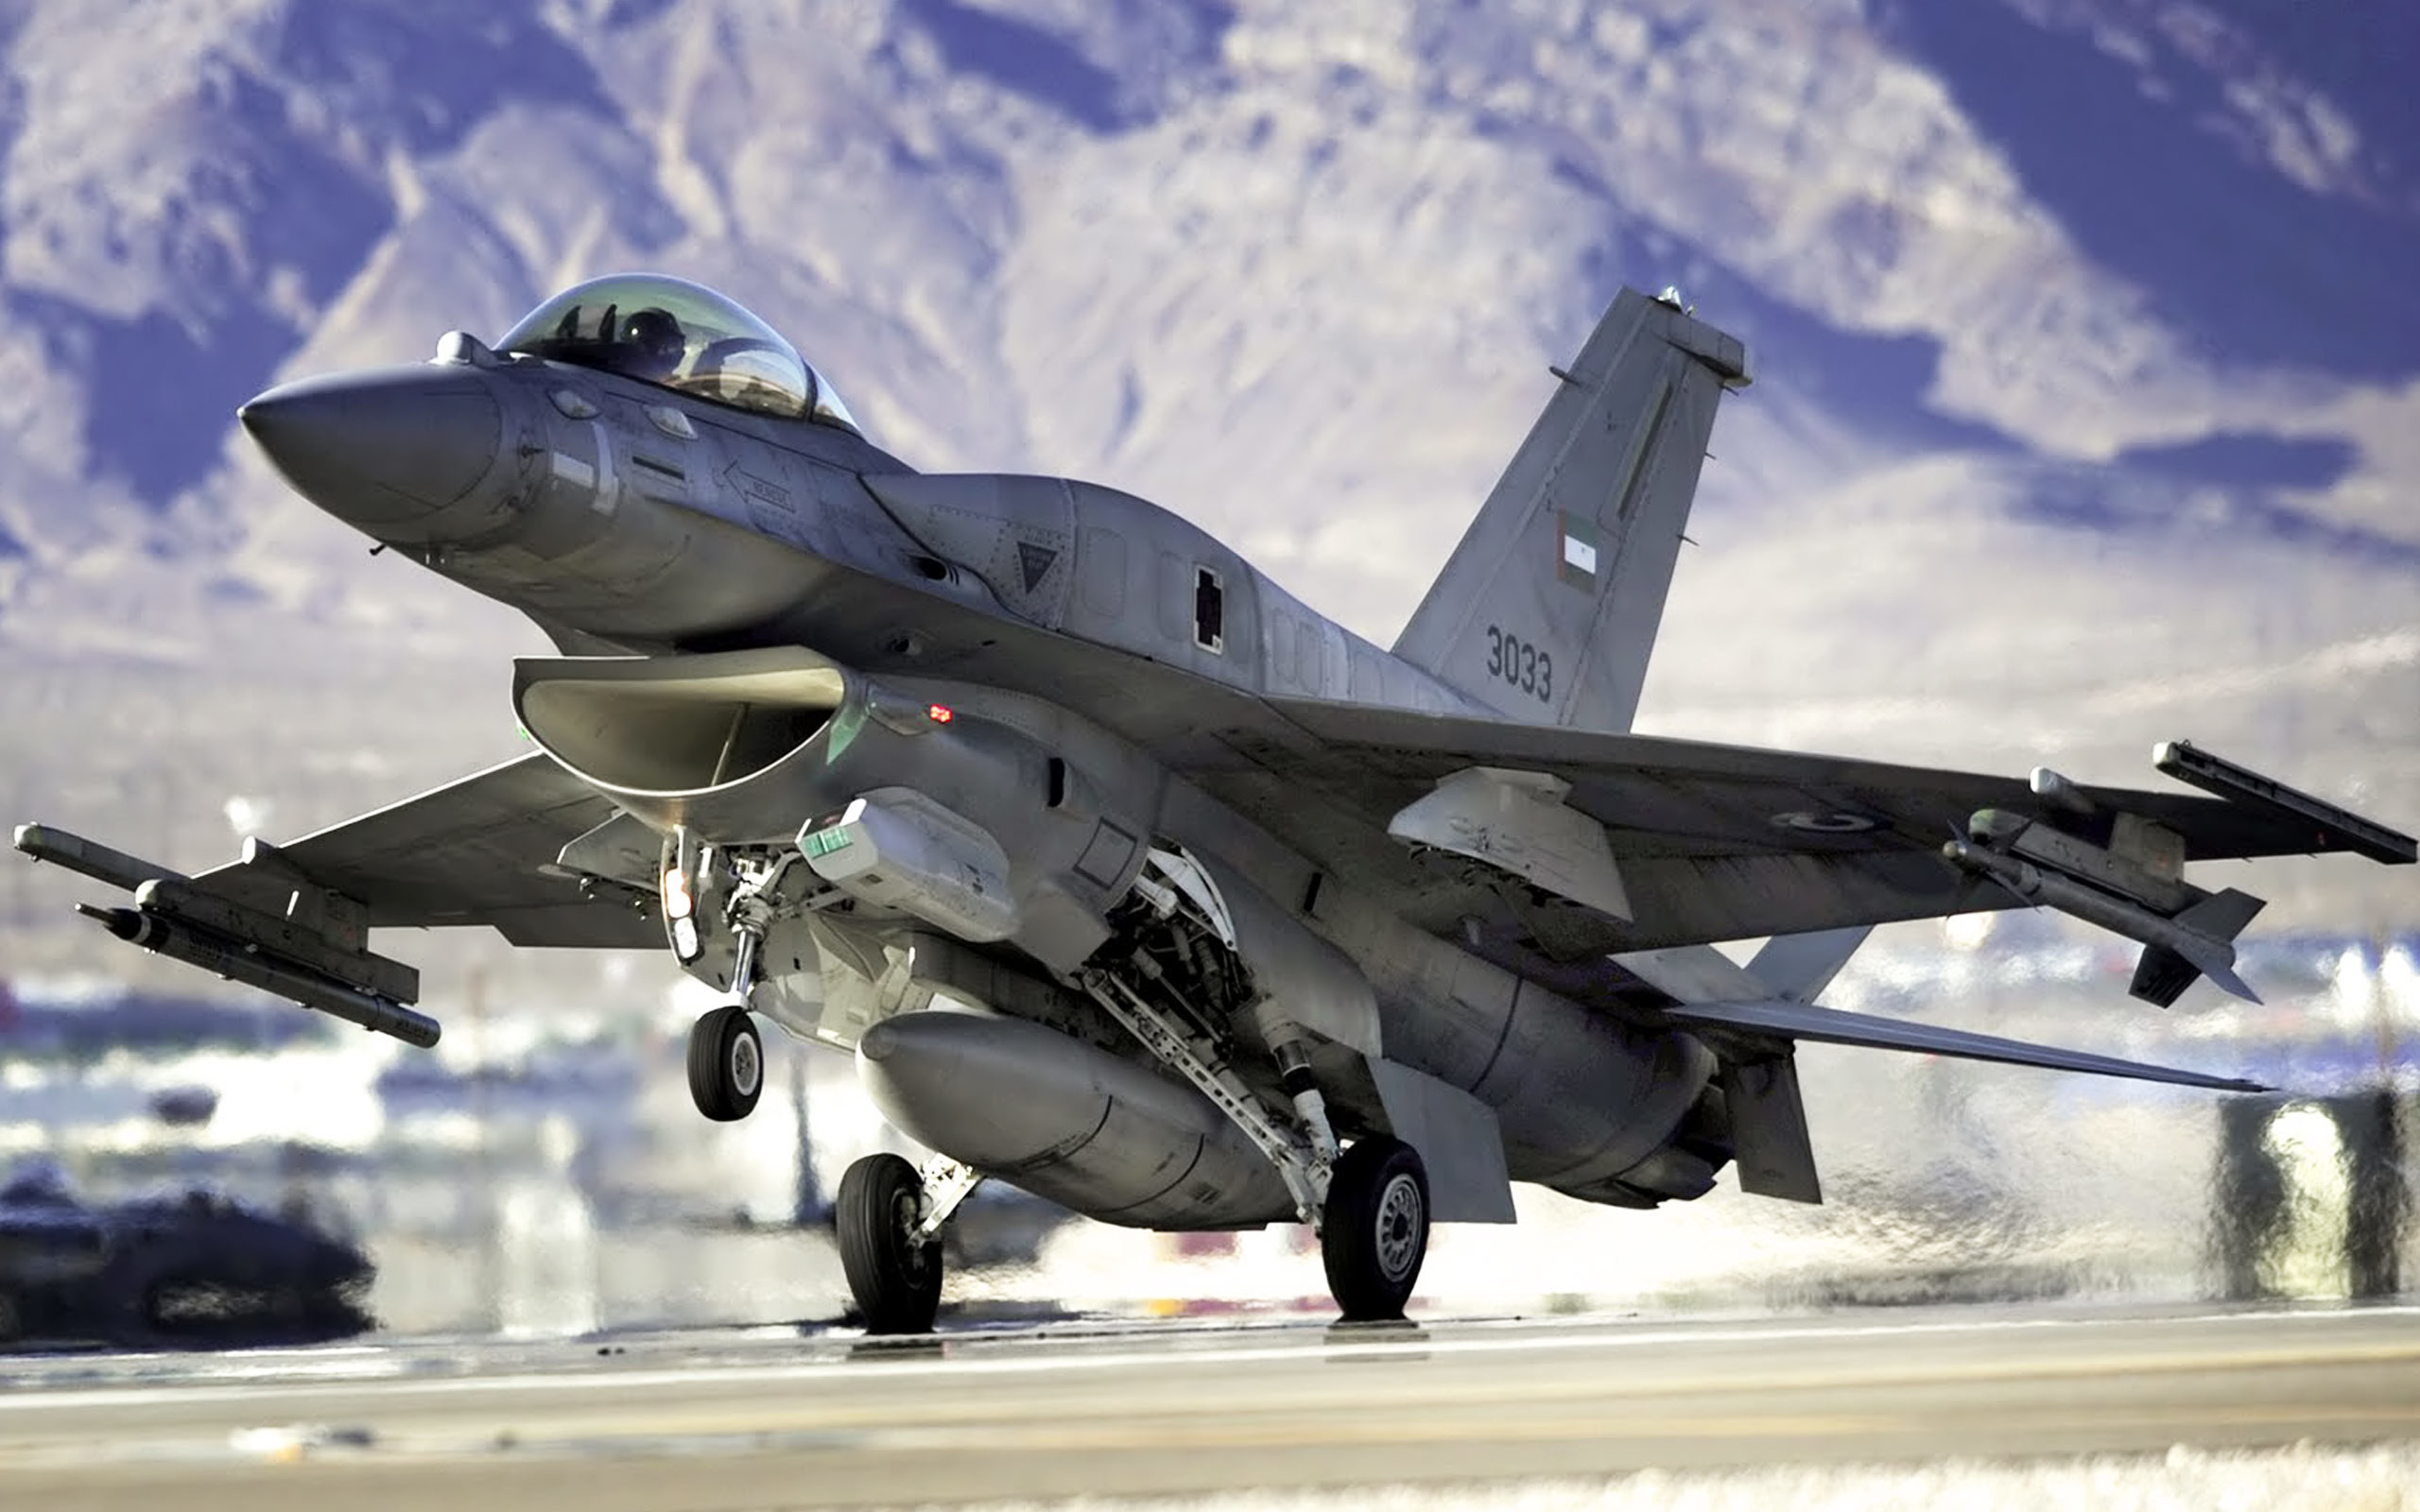 16 wallpaper,aircraft,vehicle,airplane,fighter aircraft,military aircraft